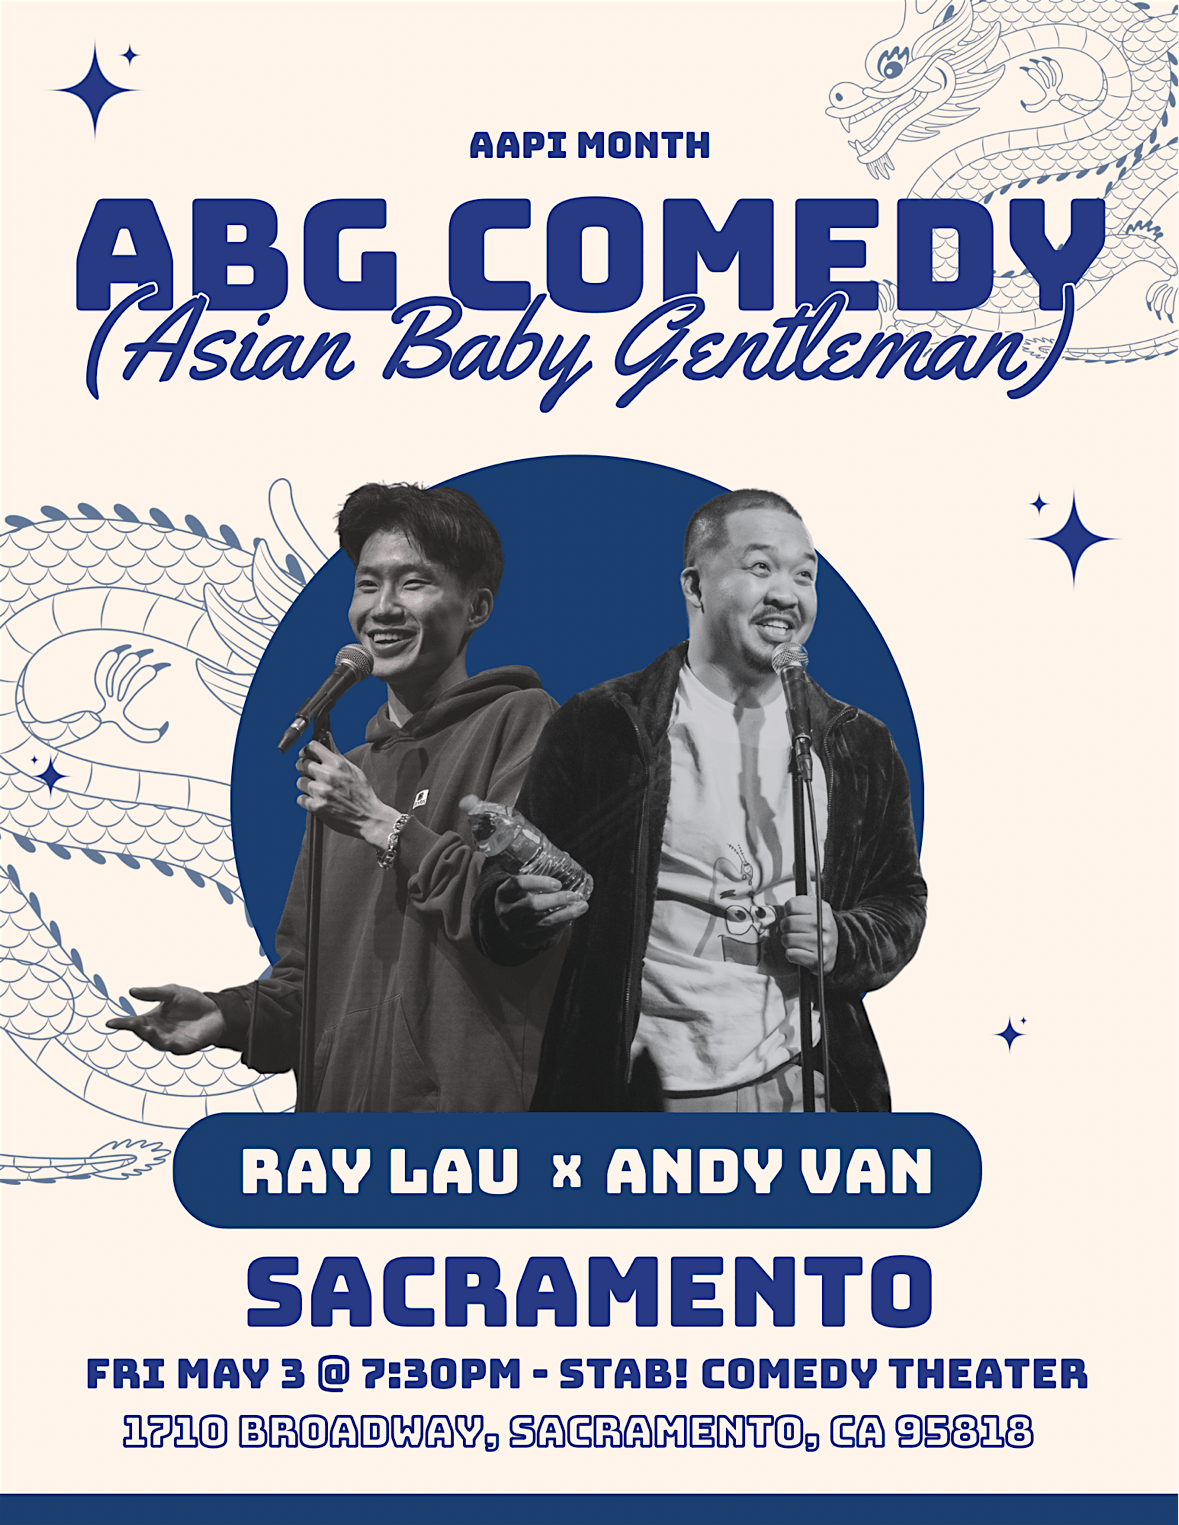 The ABG Comedy Show (Asian Baby Gentlemen)